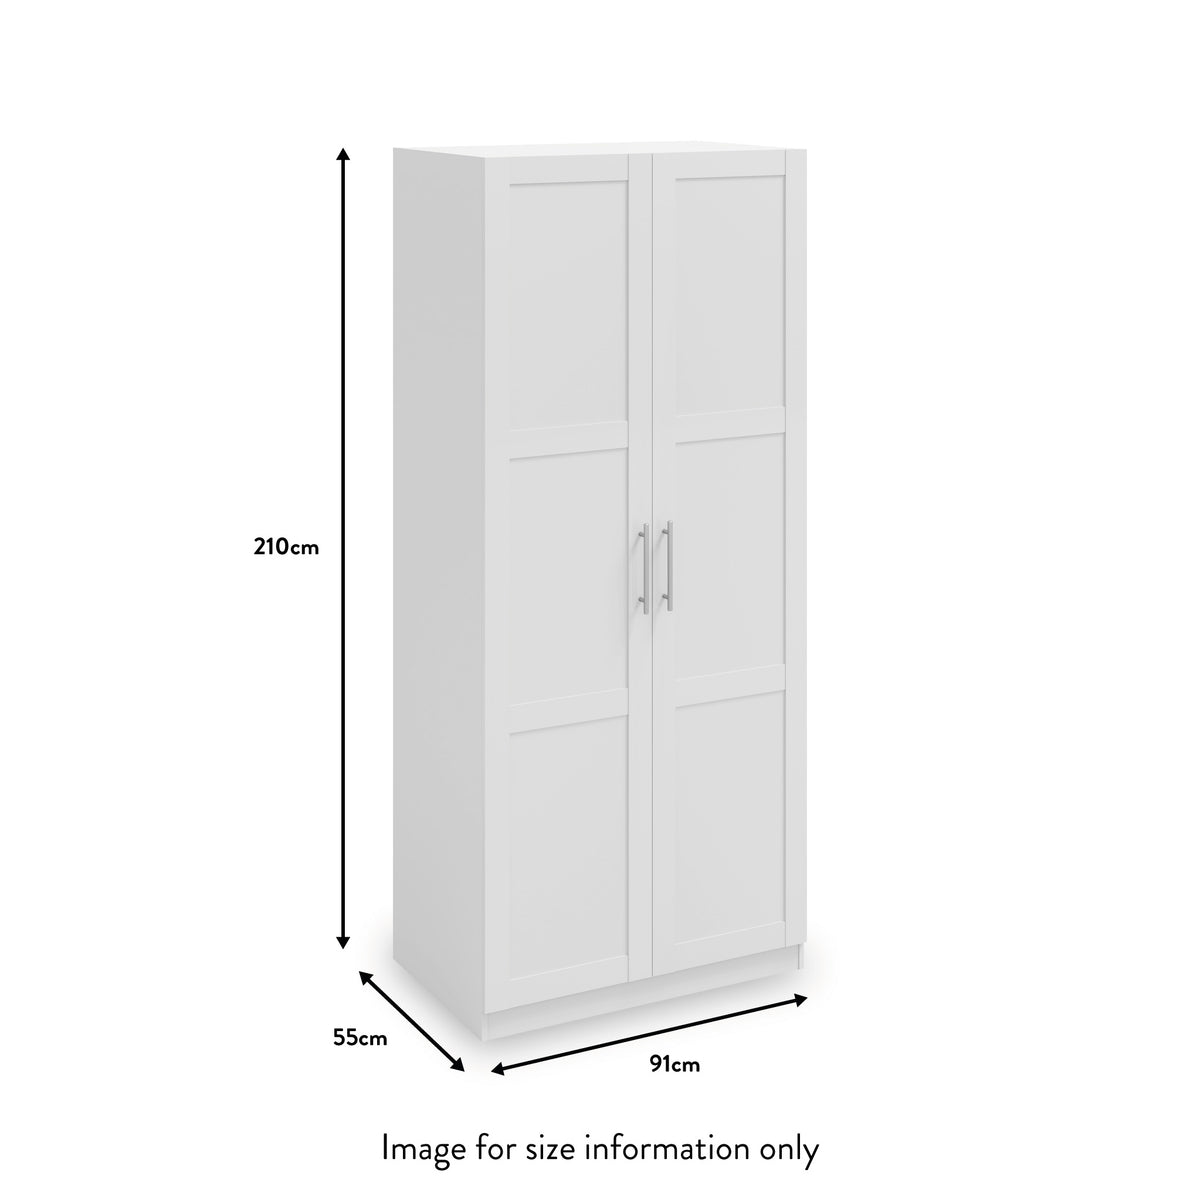 Bithlo White 2 Door Wardrobe dimensions